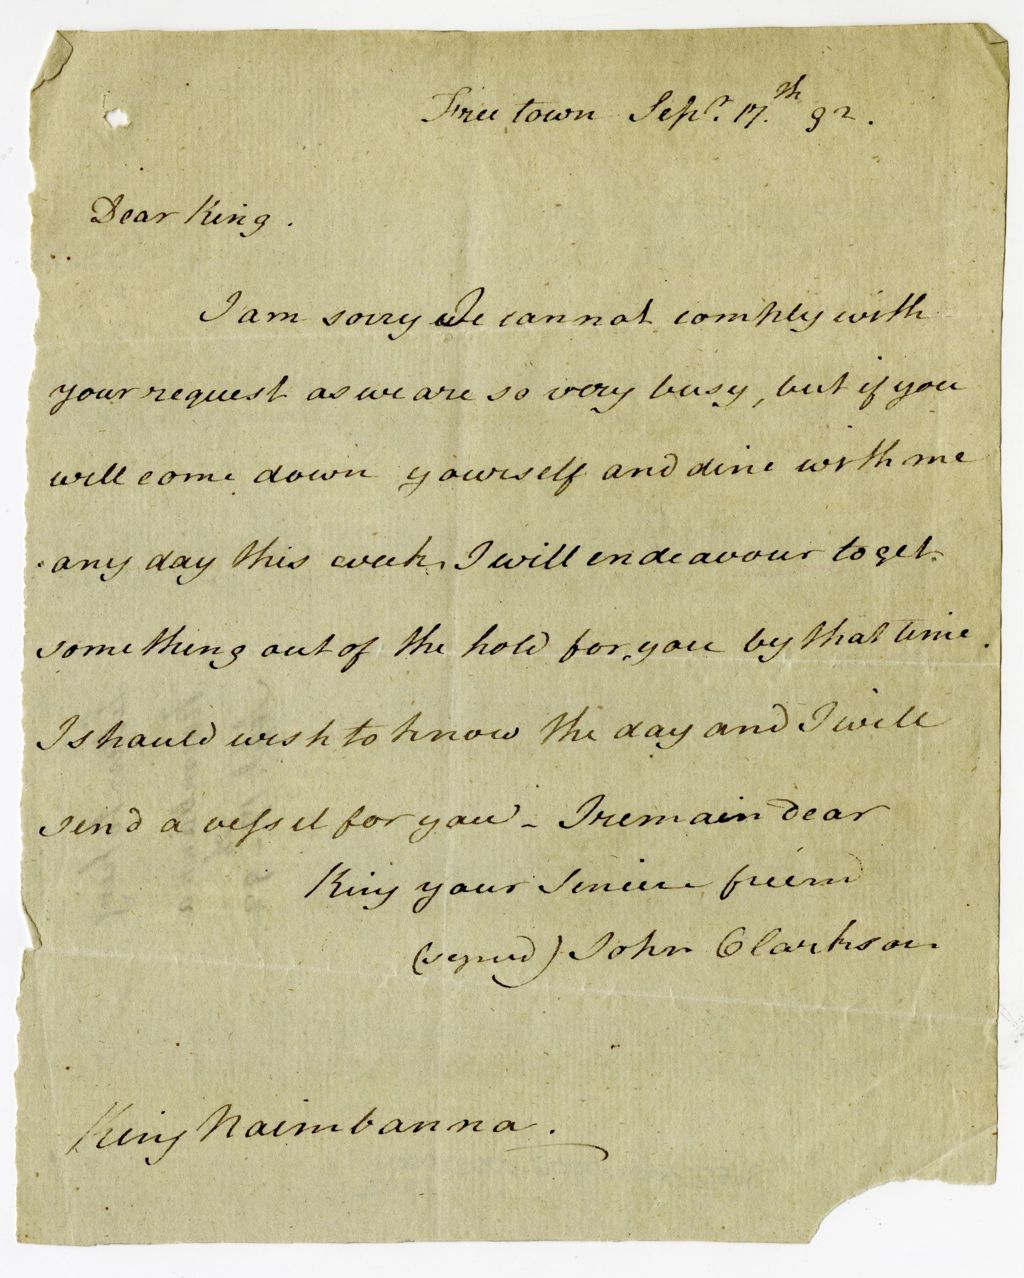 Letter from John Clarkson to King Naimbanna